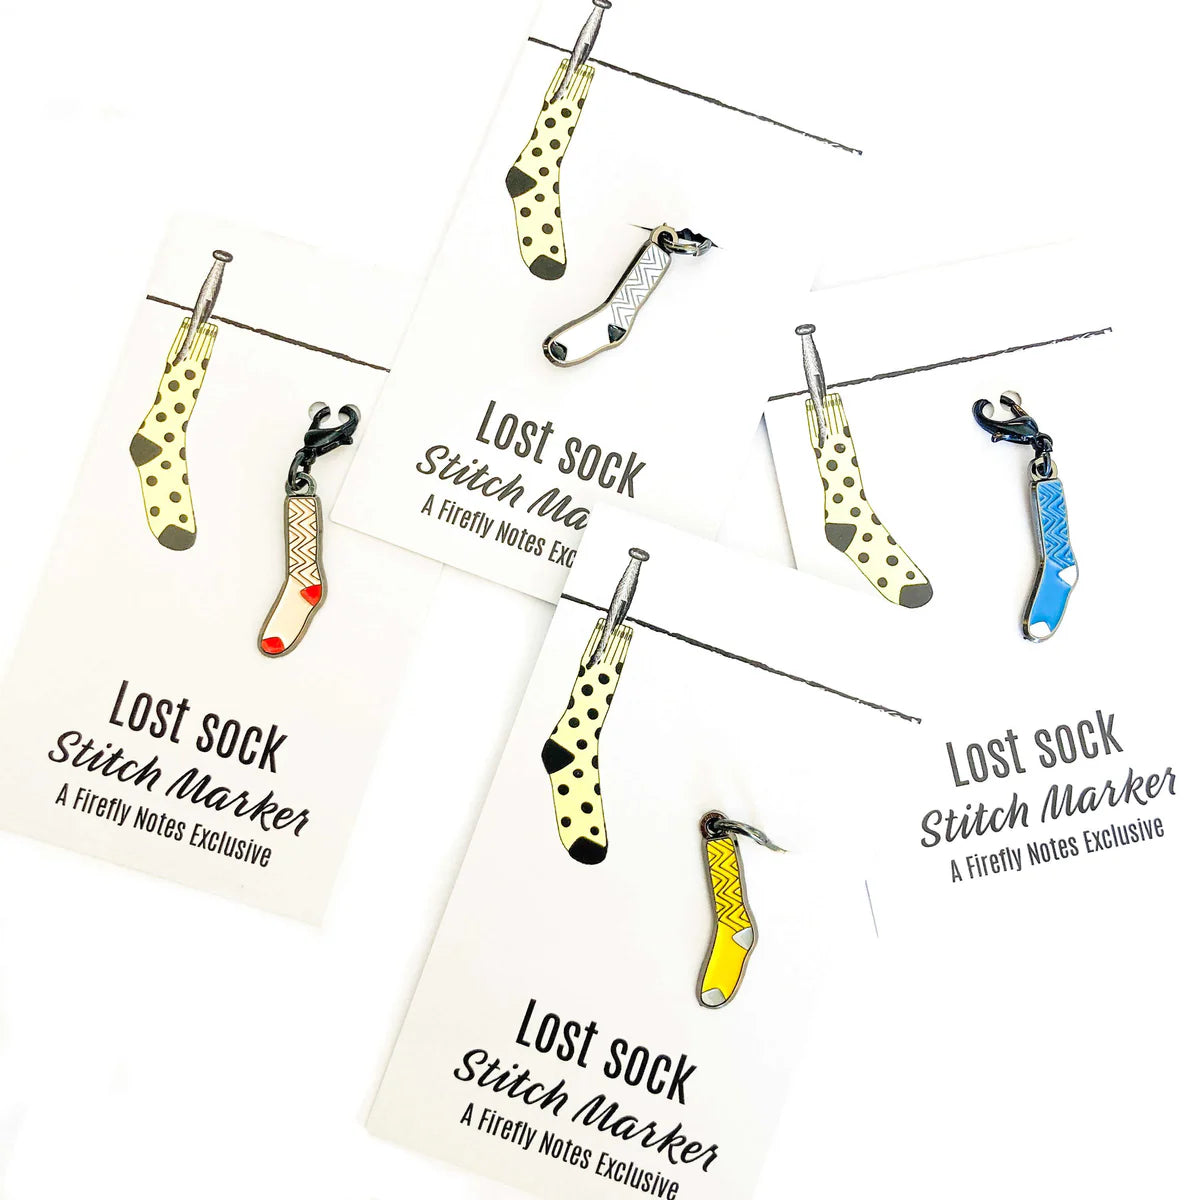 Firefly notes | Lost Sock removable Stitch Marker